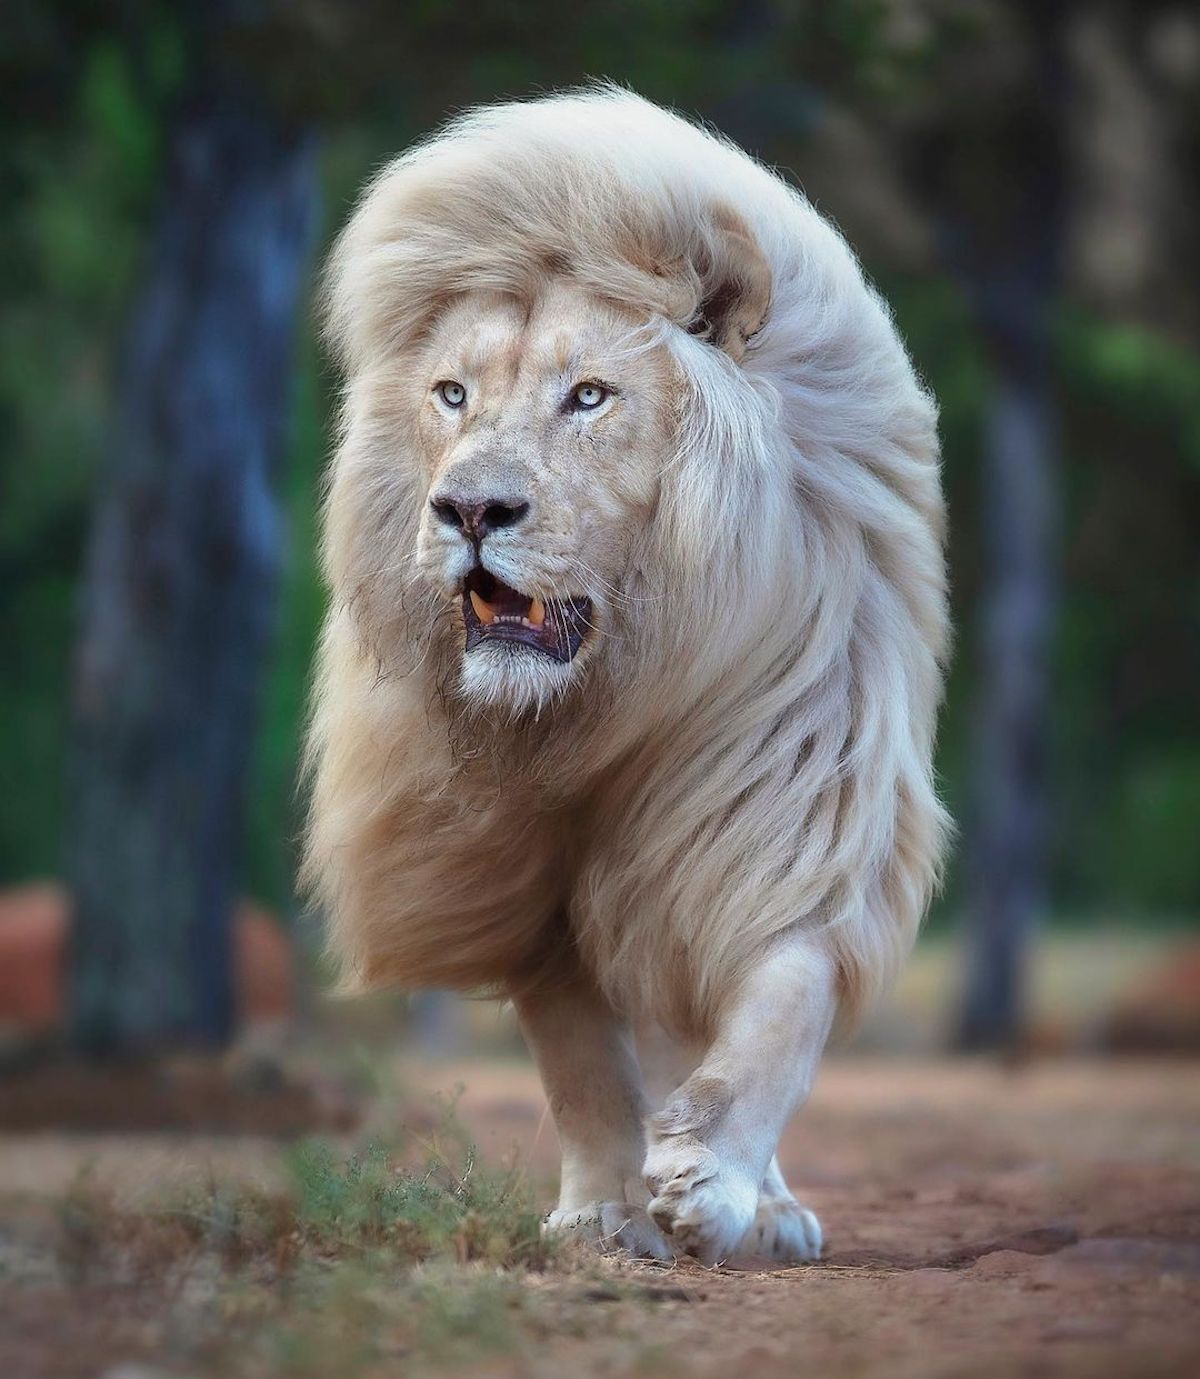 Wildlife Photographer Promotes Lion Conservation With Amazing Portraits |  Home Design, Garden & Architecture Blog Magazine